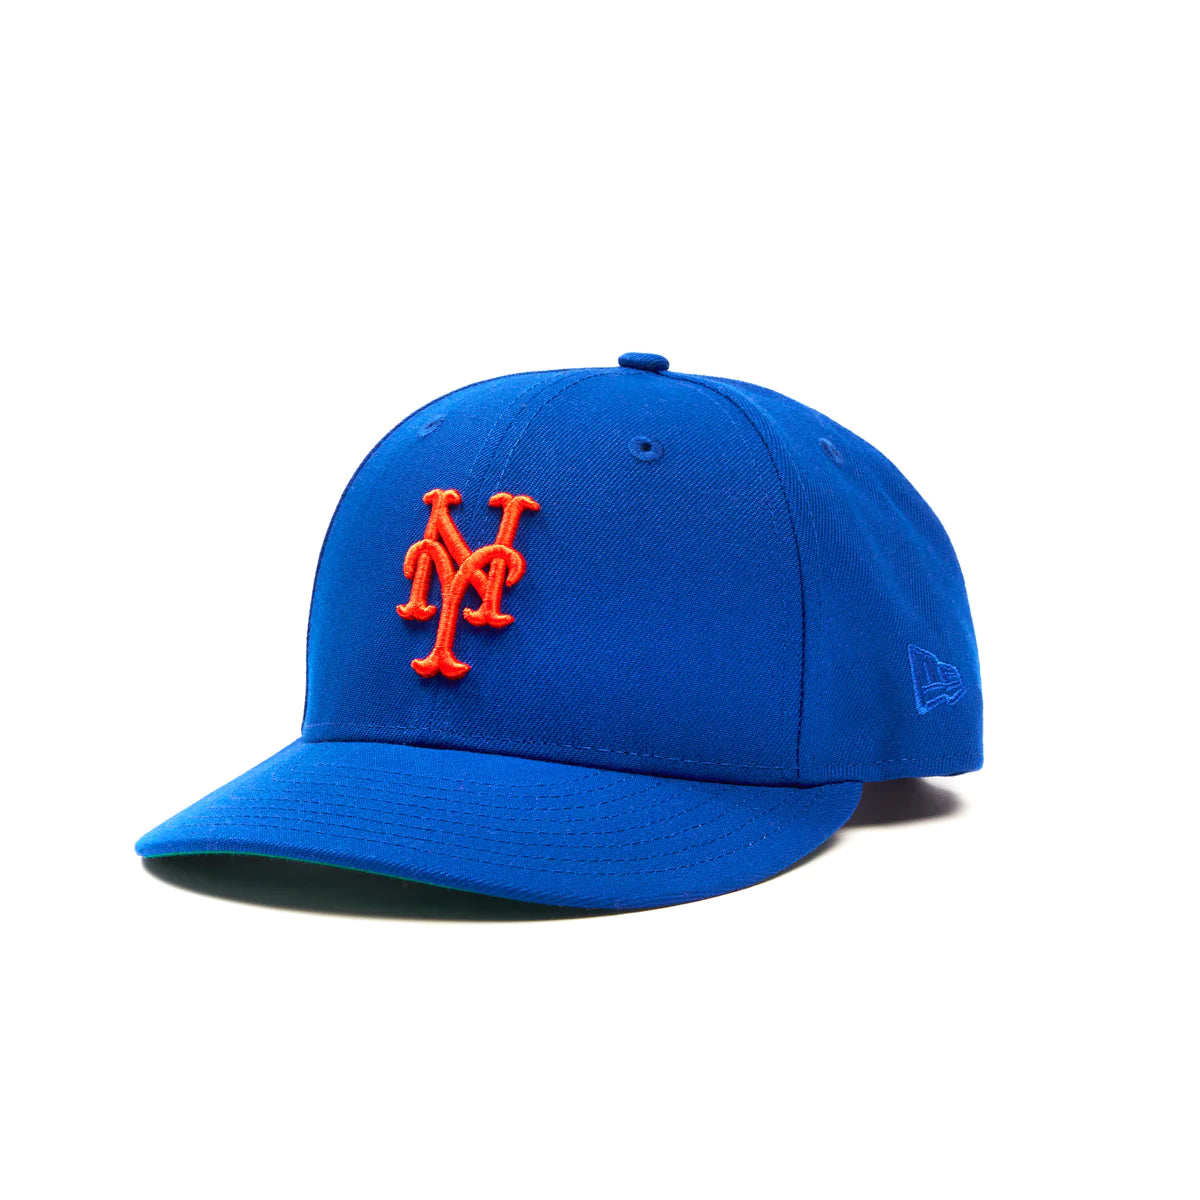 New Era Mets Cap, Royal